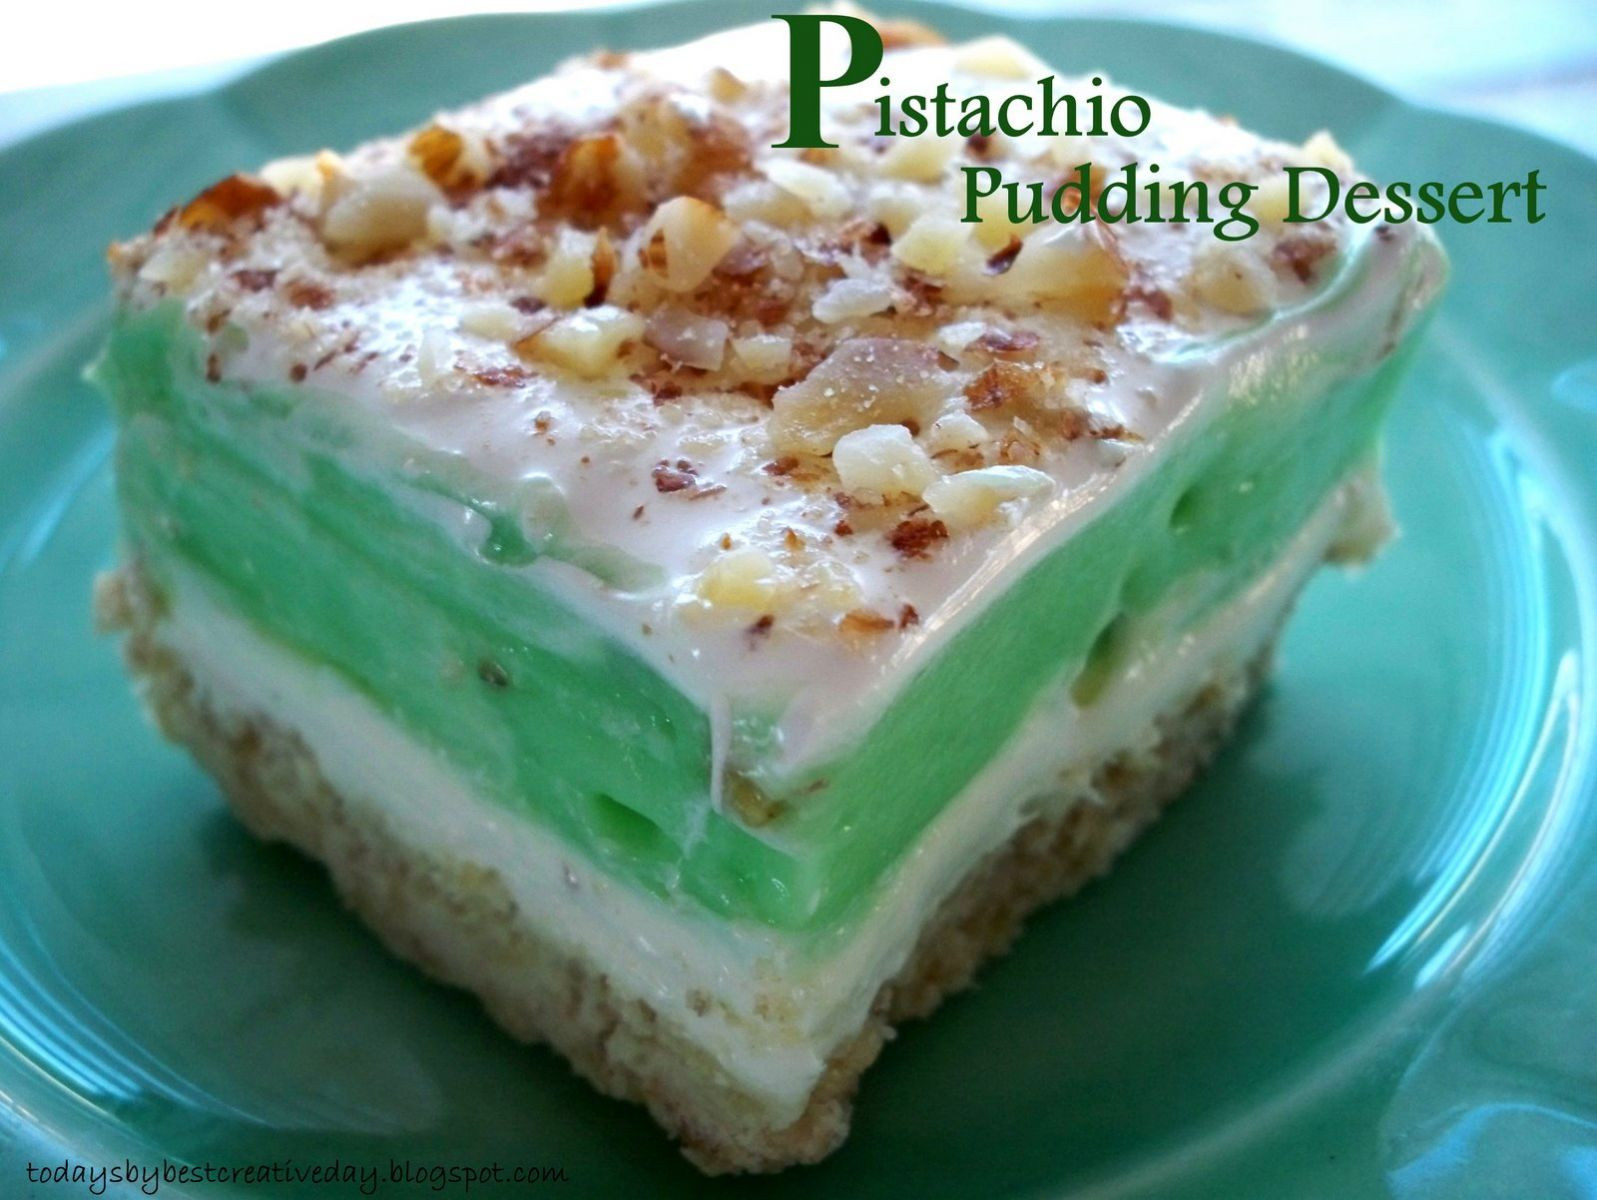 Pistachio Pudding Dessert
 Top 5 Pistachio Pudding Desserts For Kids by festivalfoods